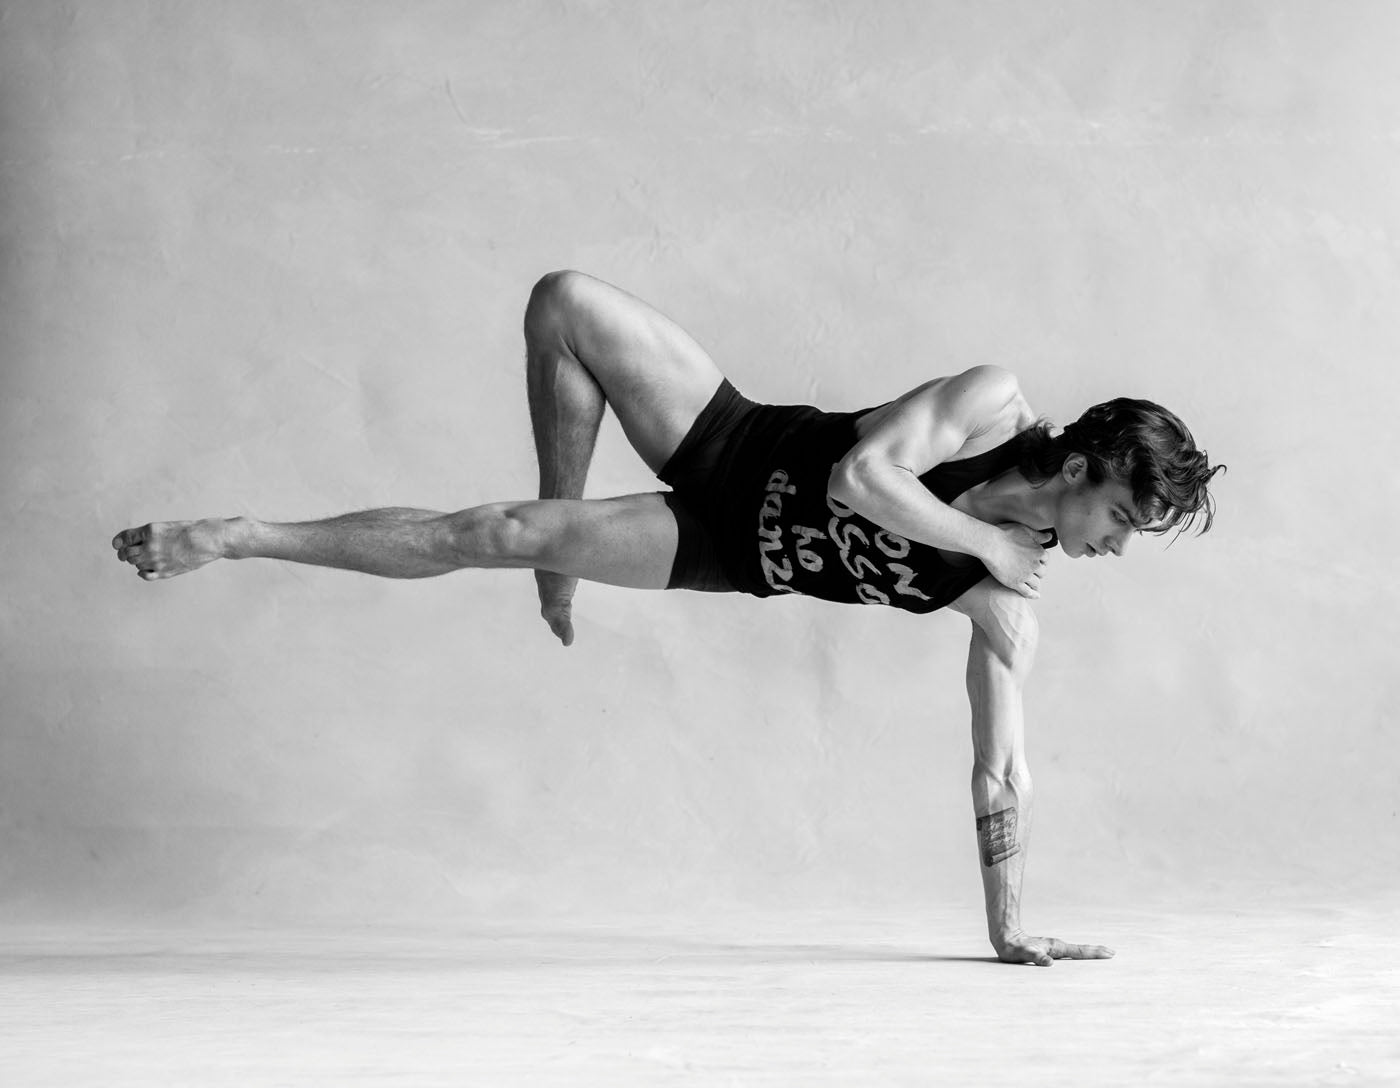 Francesco Gabriele Frola, National Ballet of Canada. Photograph by Karolina Kuras